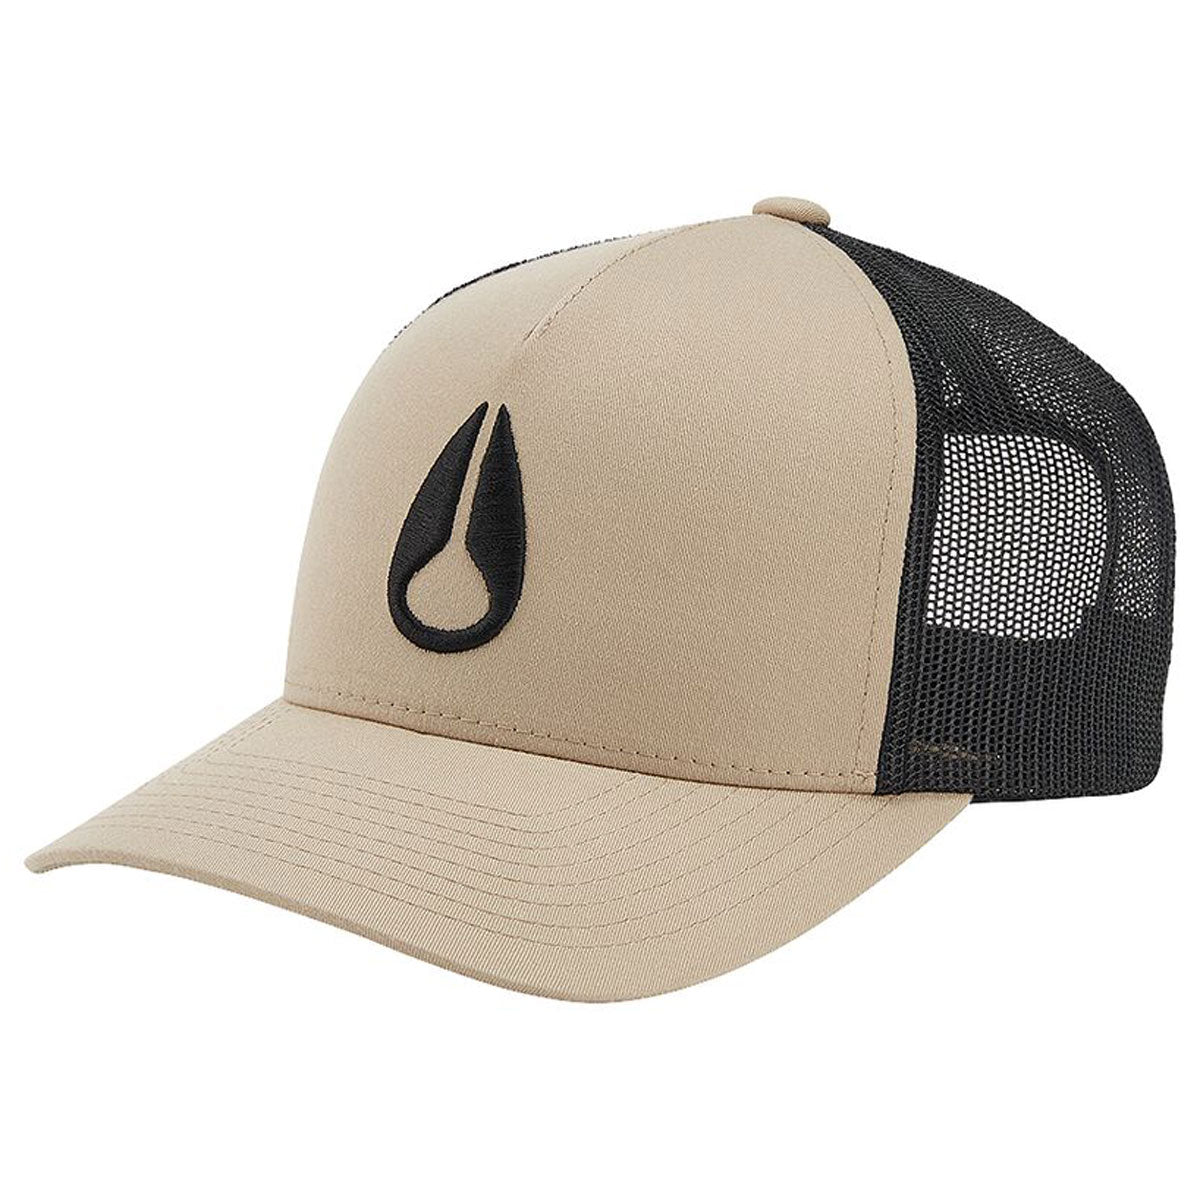 Nixon Iconed Trucker Hat - Khaki/Black image 1